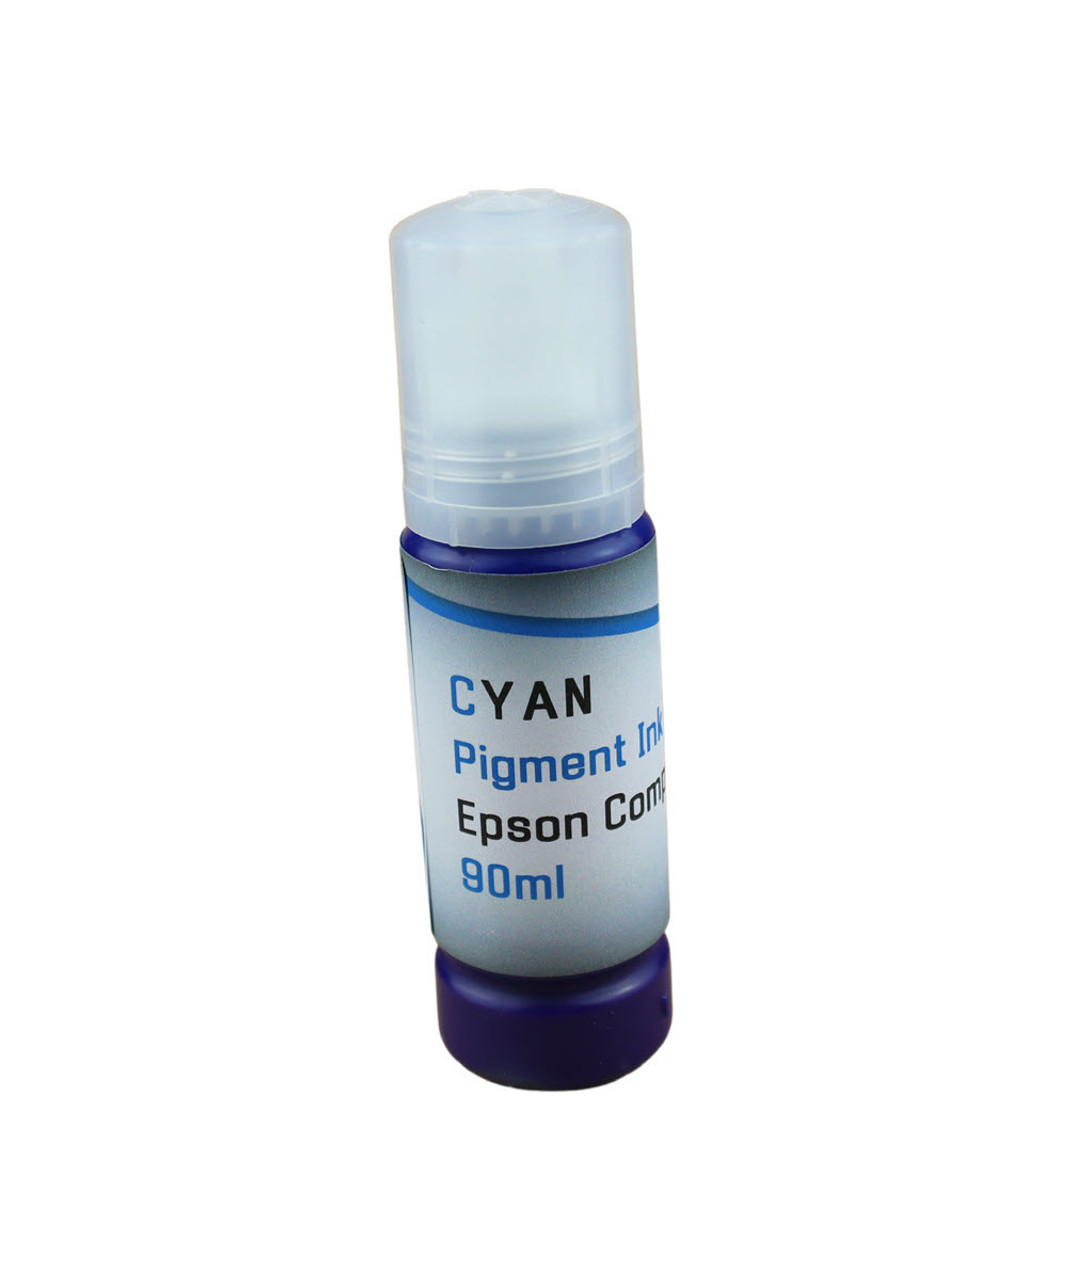 Cyan Pigment Ink 90ml Bottle for Epson EcoTank ET-5800 ET-5850 ET-5880 Printer
